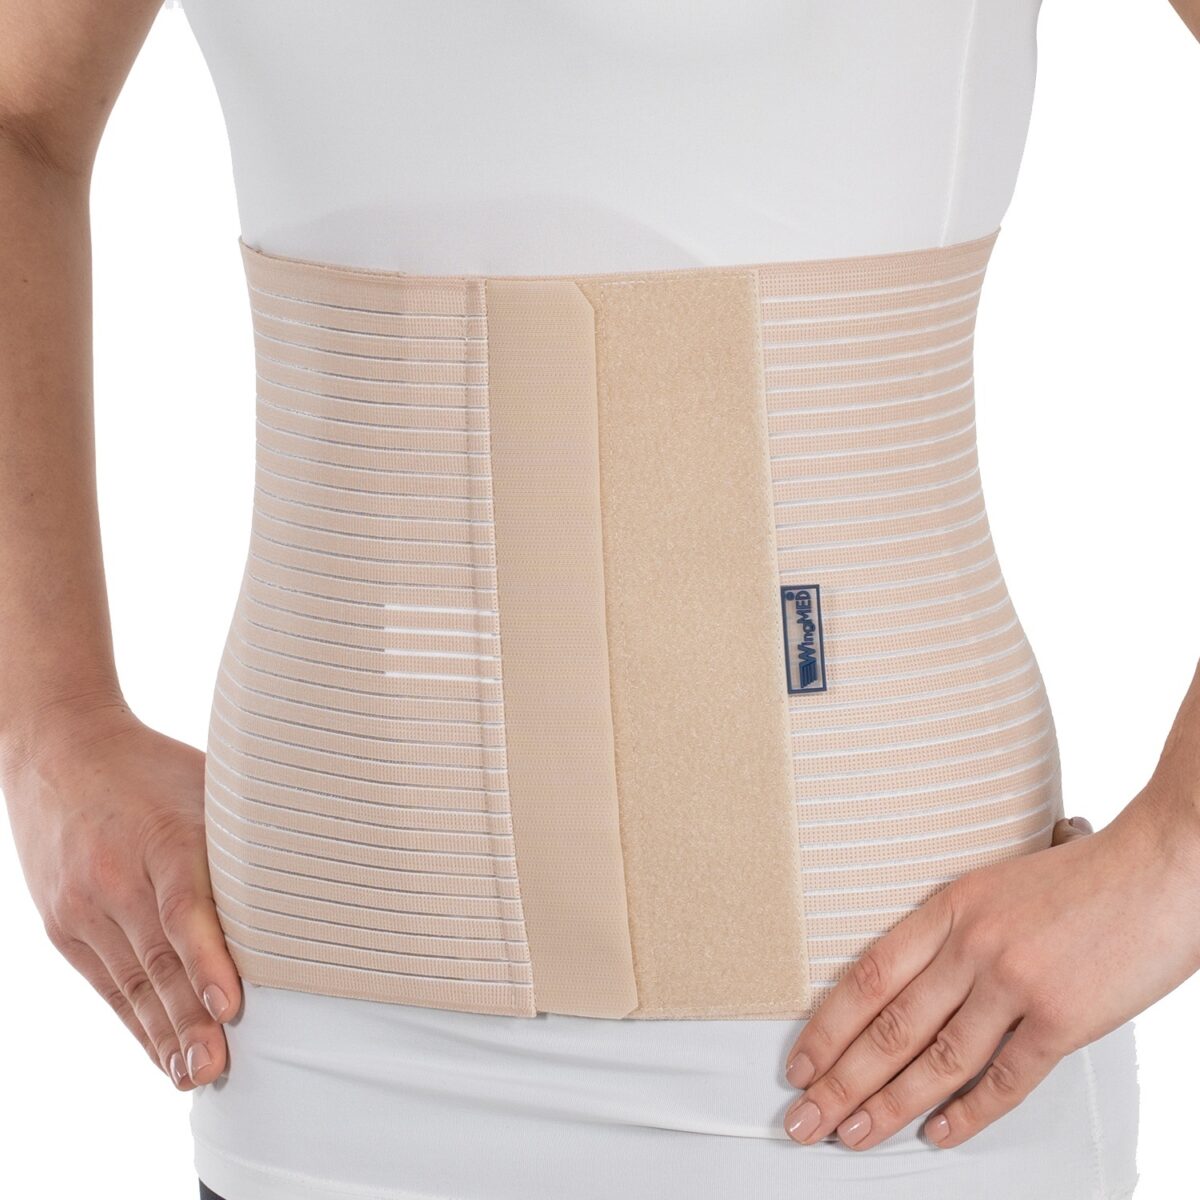 wingmed orthopedic equipments W412 abdominal corset 26cm 38